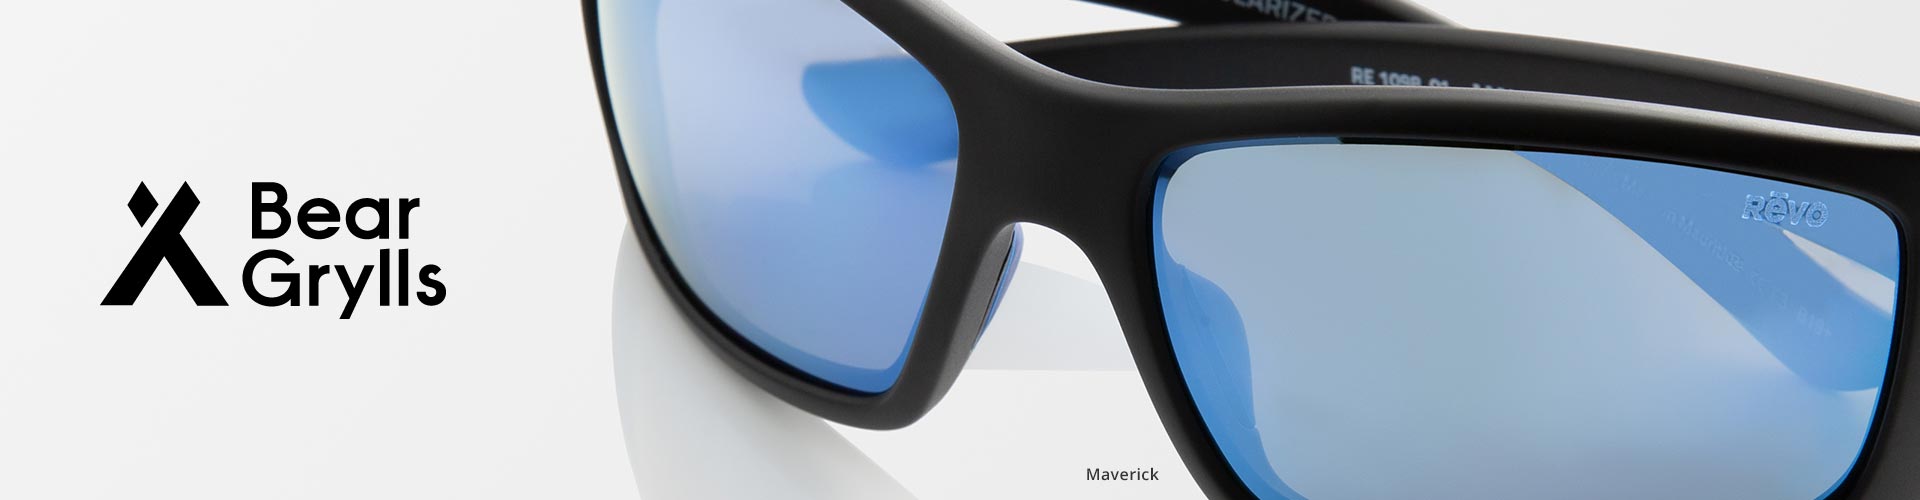 Shop Revo x Bear Grylls Sunglasses - model Maverick featured